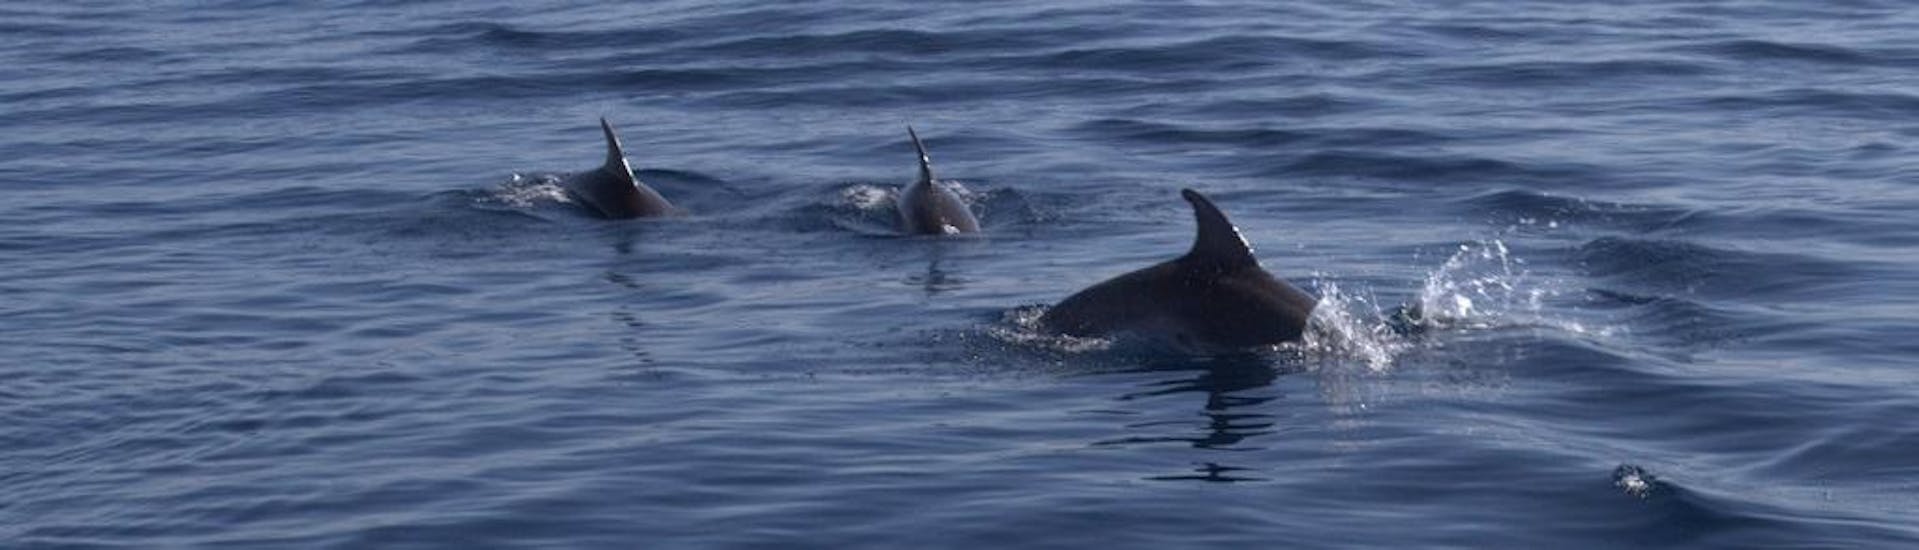 Delfinbeobachtung am Capo Figari mit Schnorchelstopps.